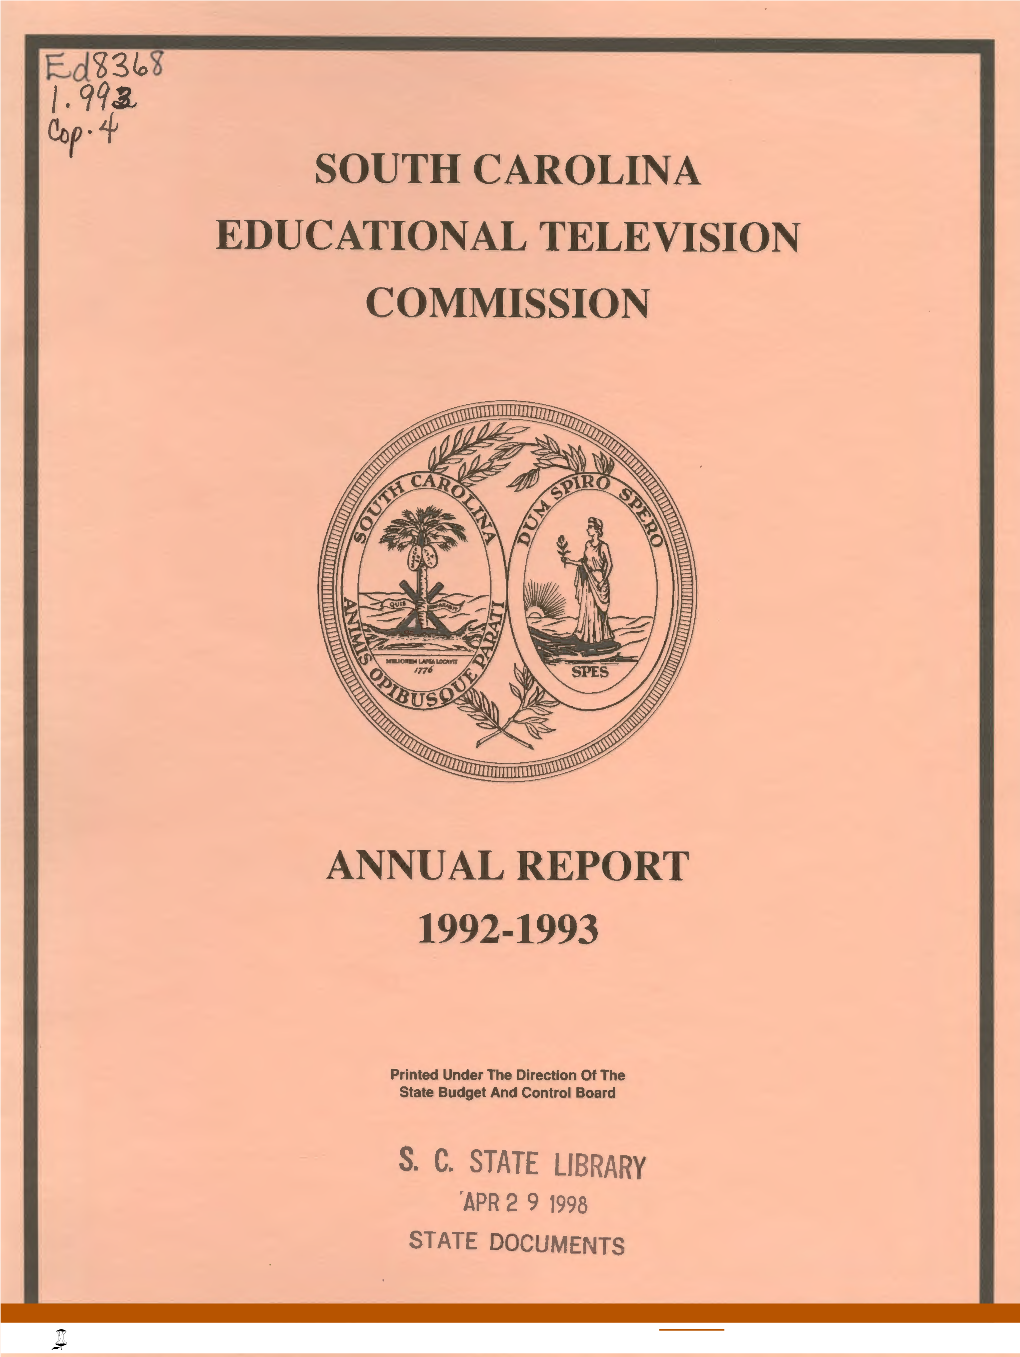 South Carolina Educational Television Commission